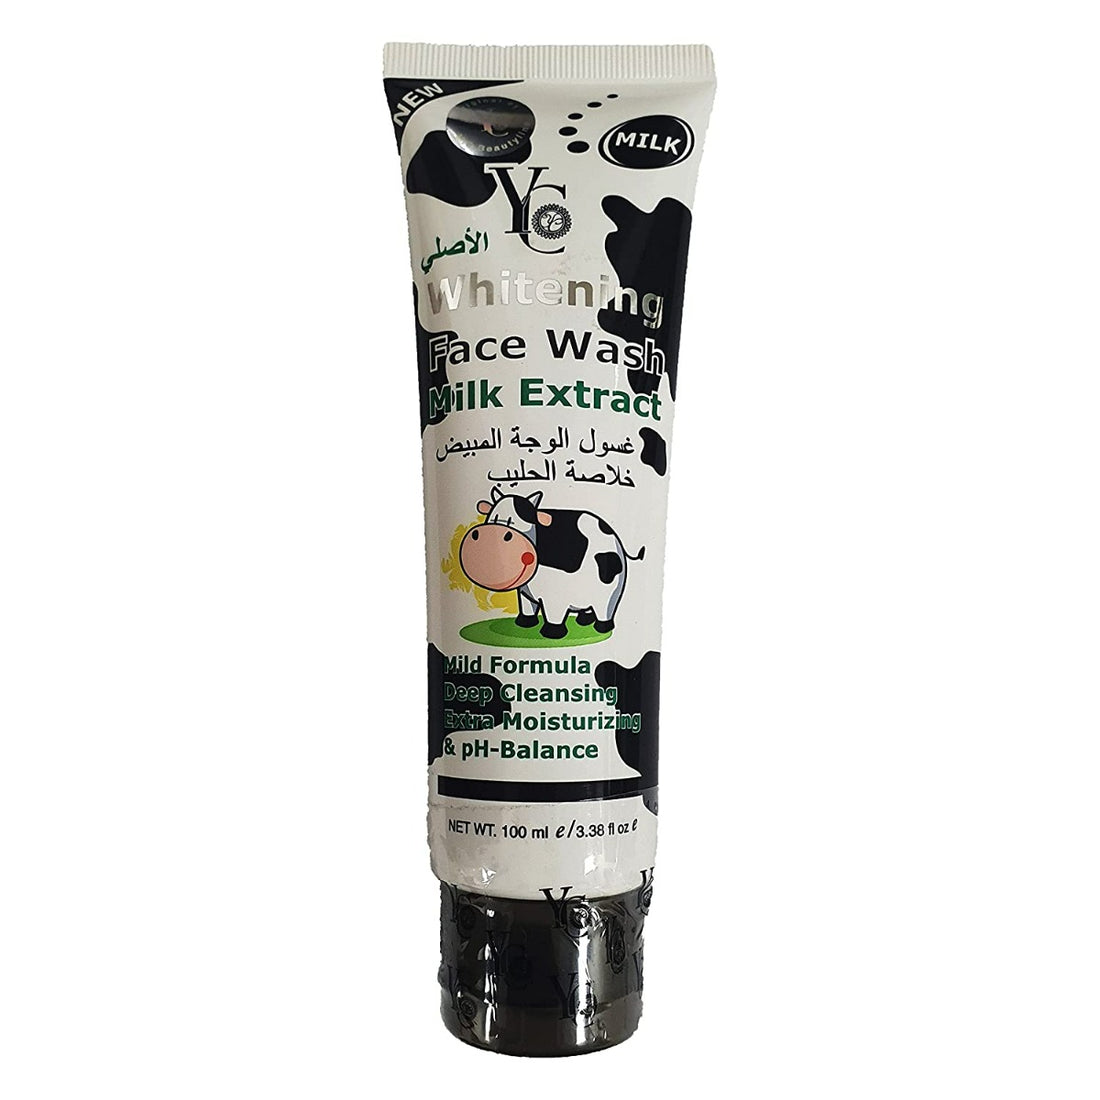 YC Whitening Face Wash Milk Extract (50ml)